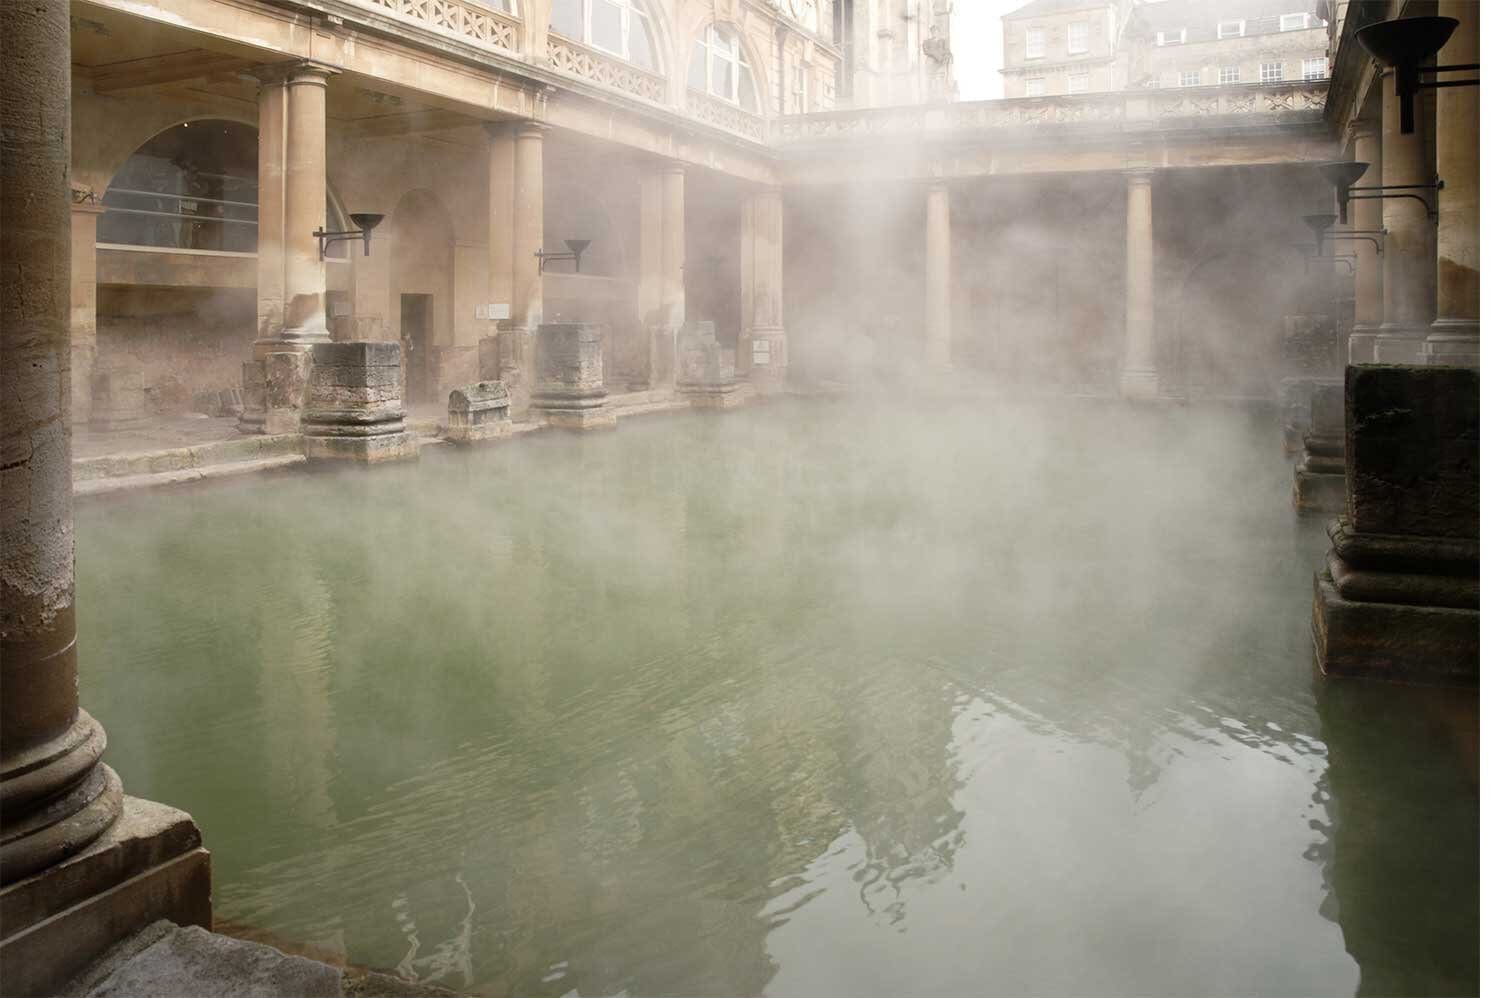 Bath Roman Baths